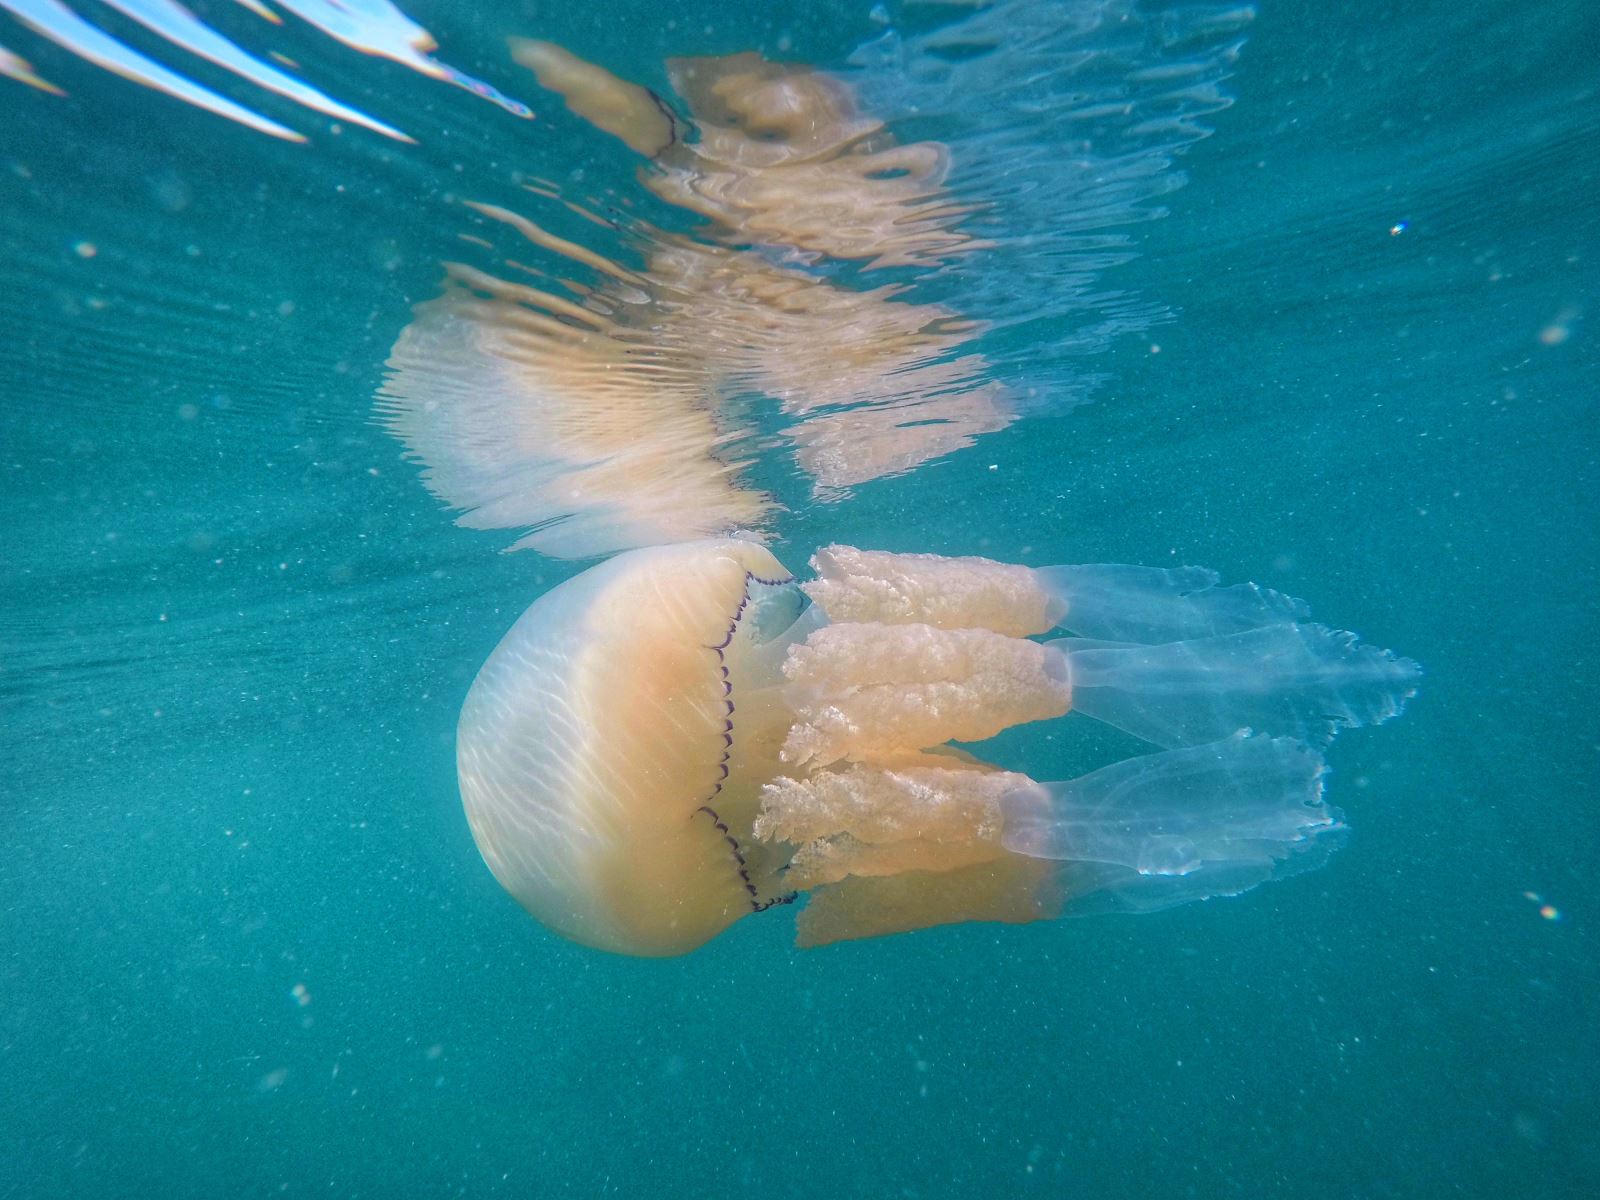 Barrel Jellyfish swimming in sea